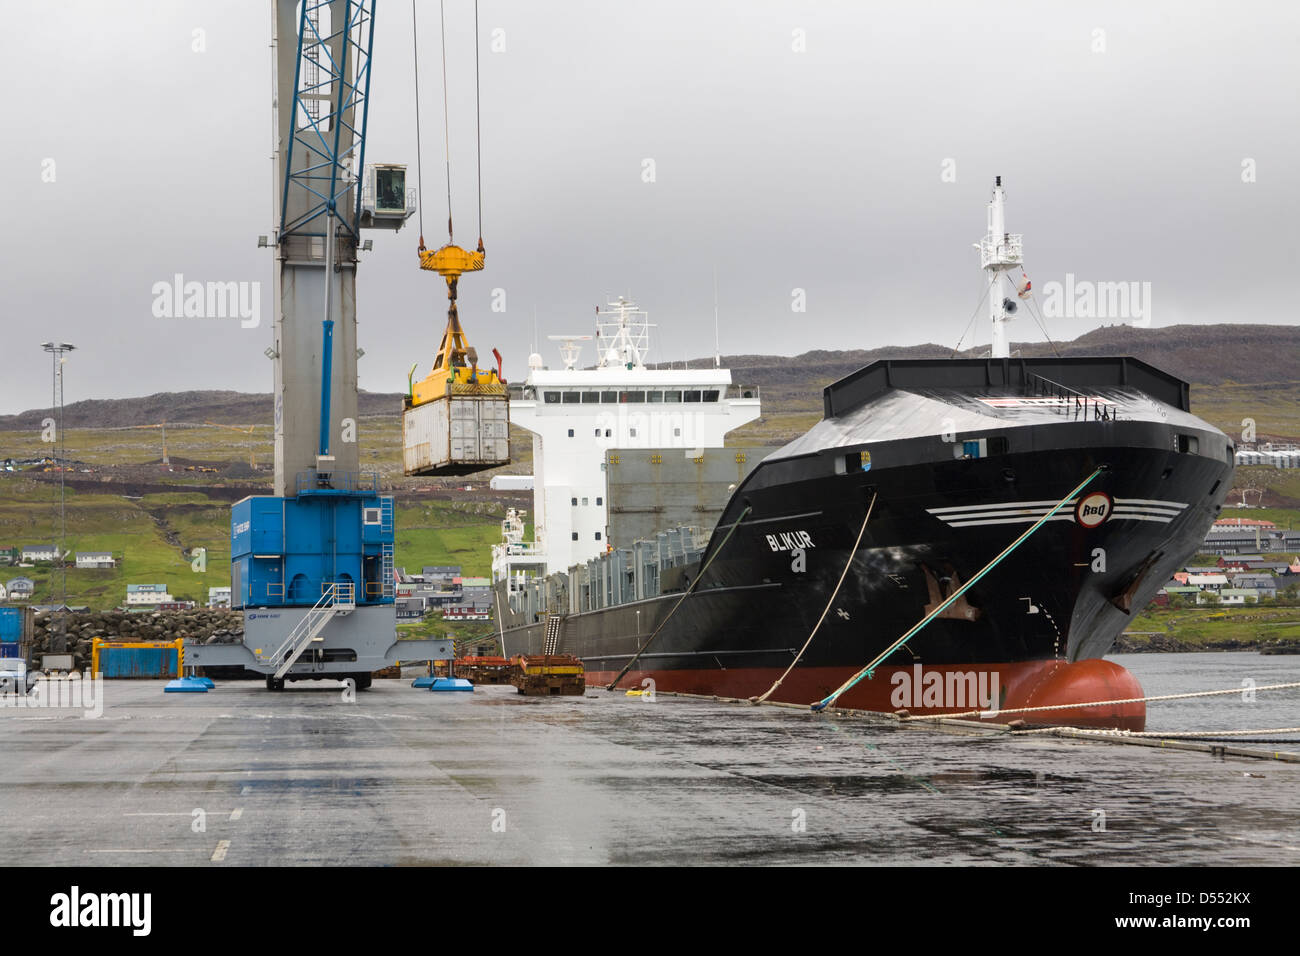 Container Cargoship Faroe Islands Torshavn Shipping Stock Photo